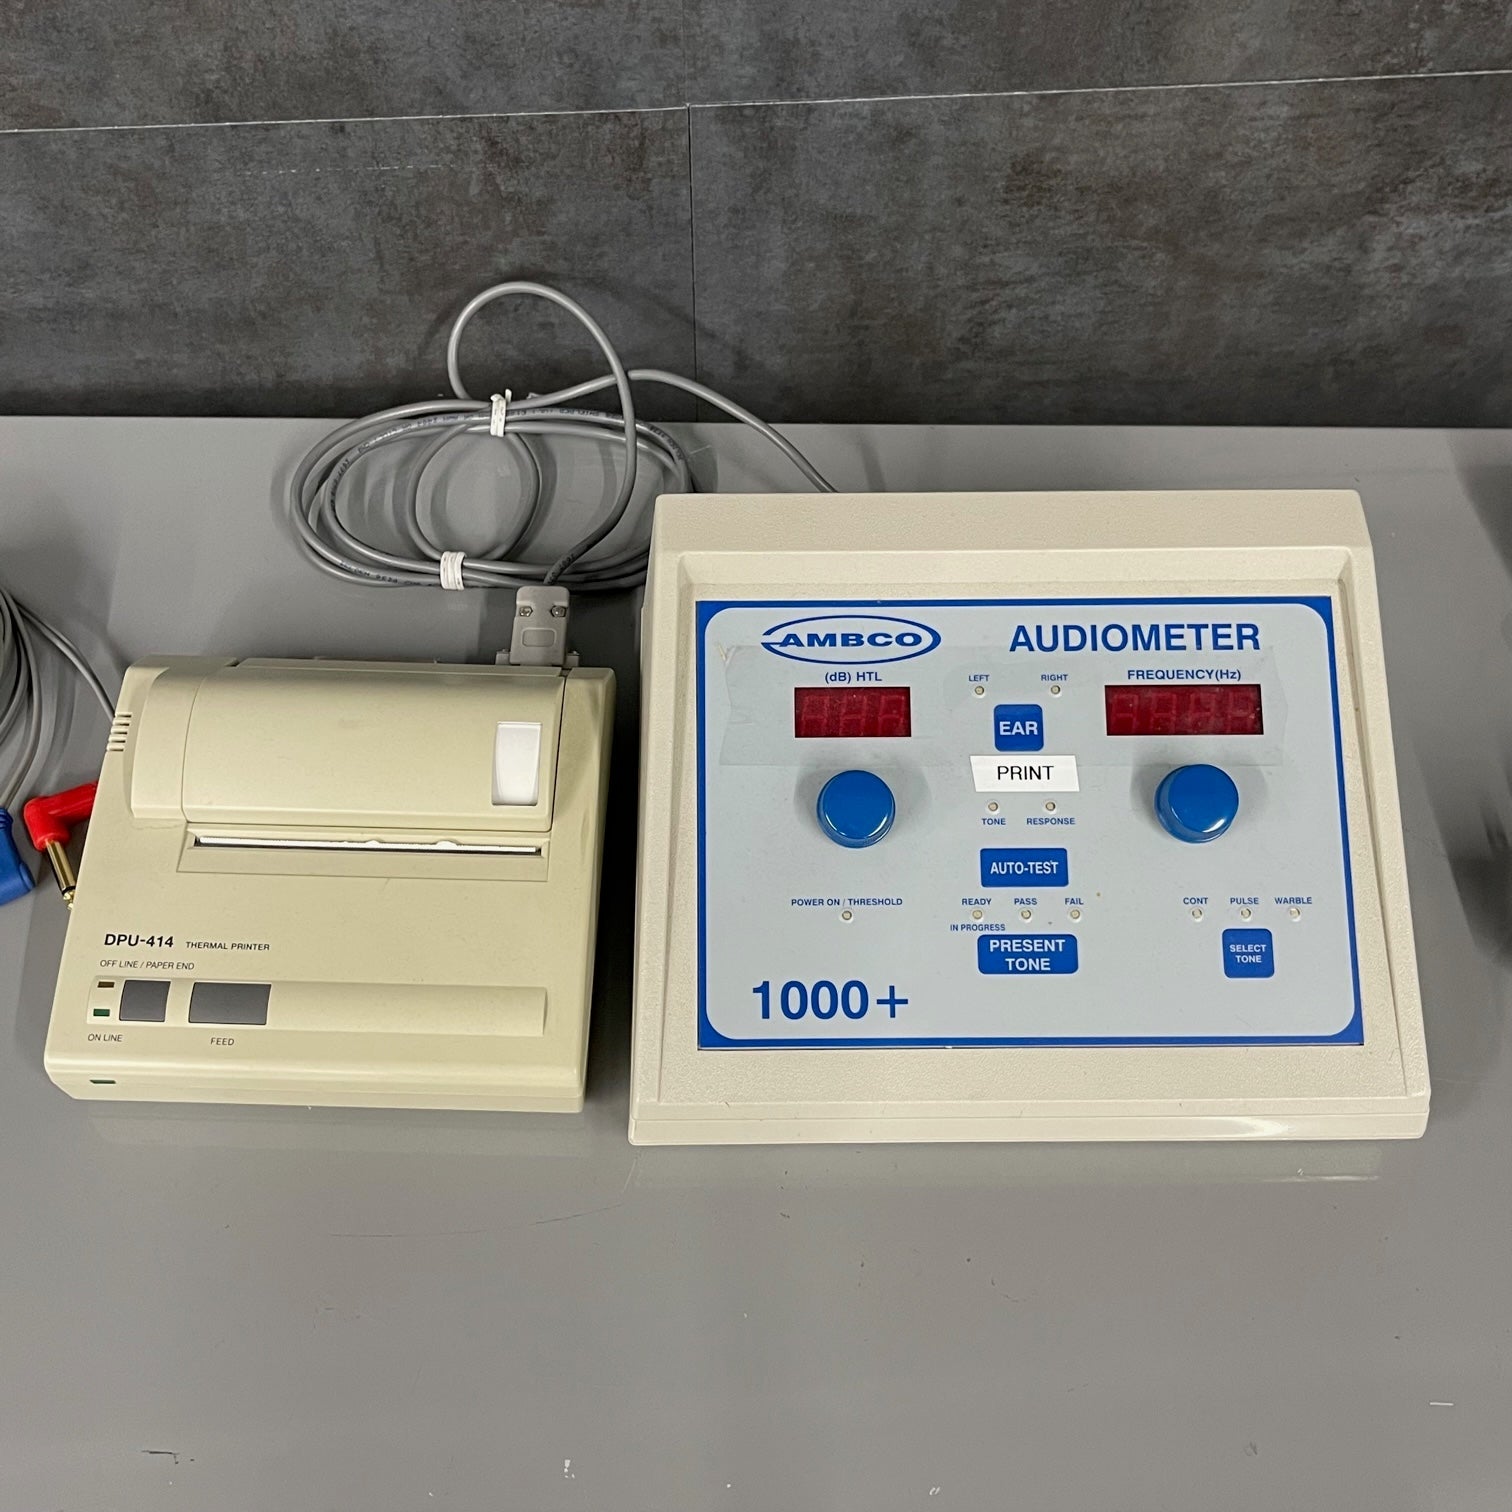 AMBCO 1000+ Audiometer